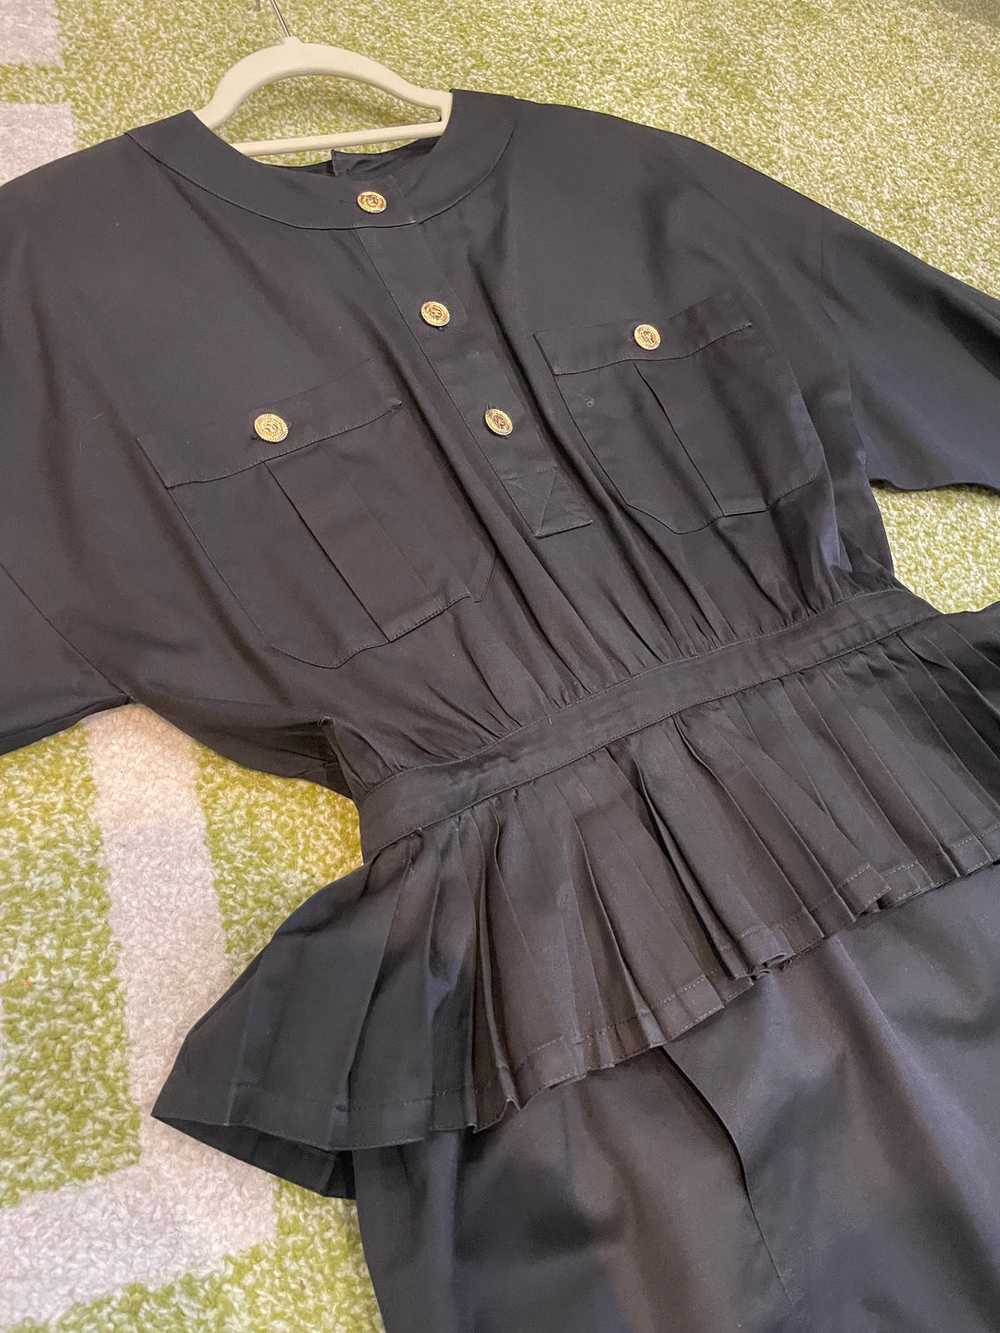 Chanel Black Cotton Dress (Size 4) - image 9